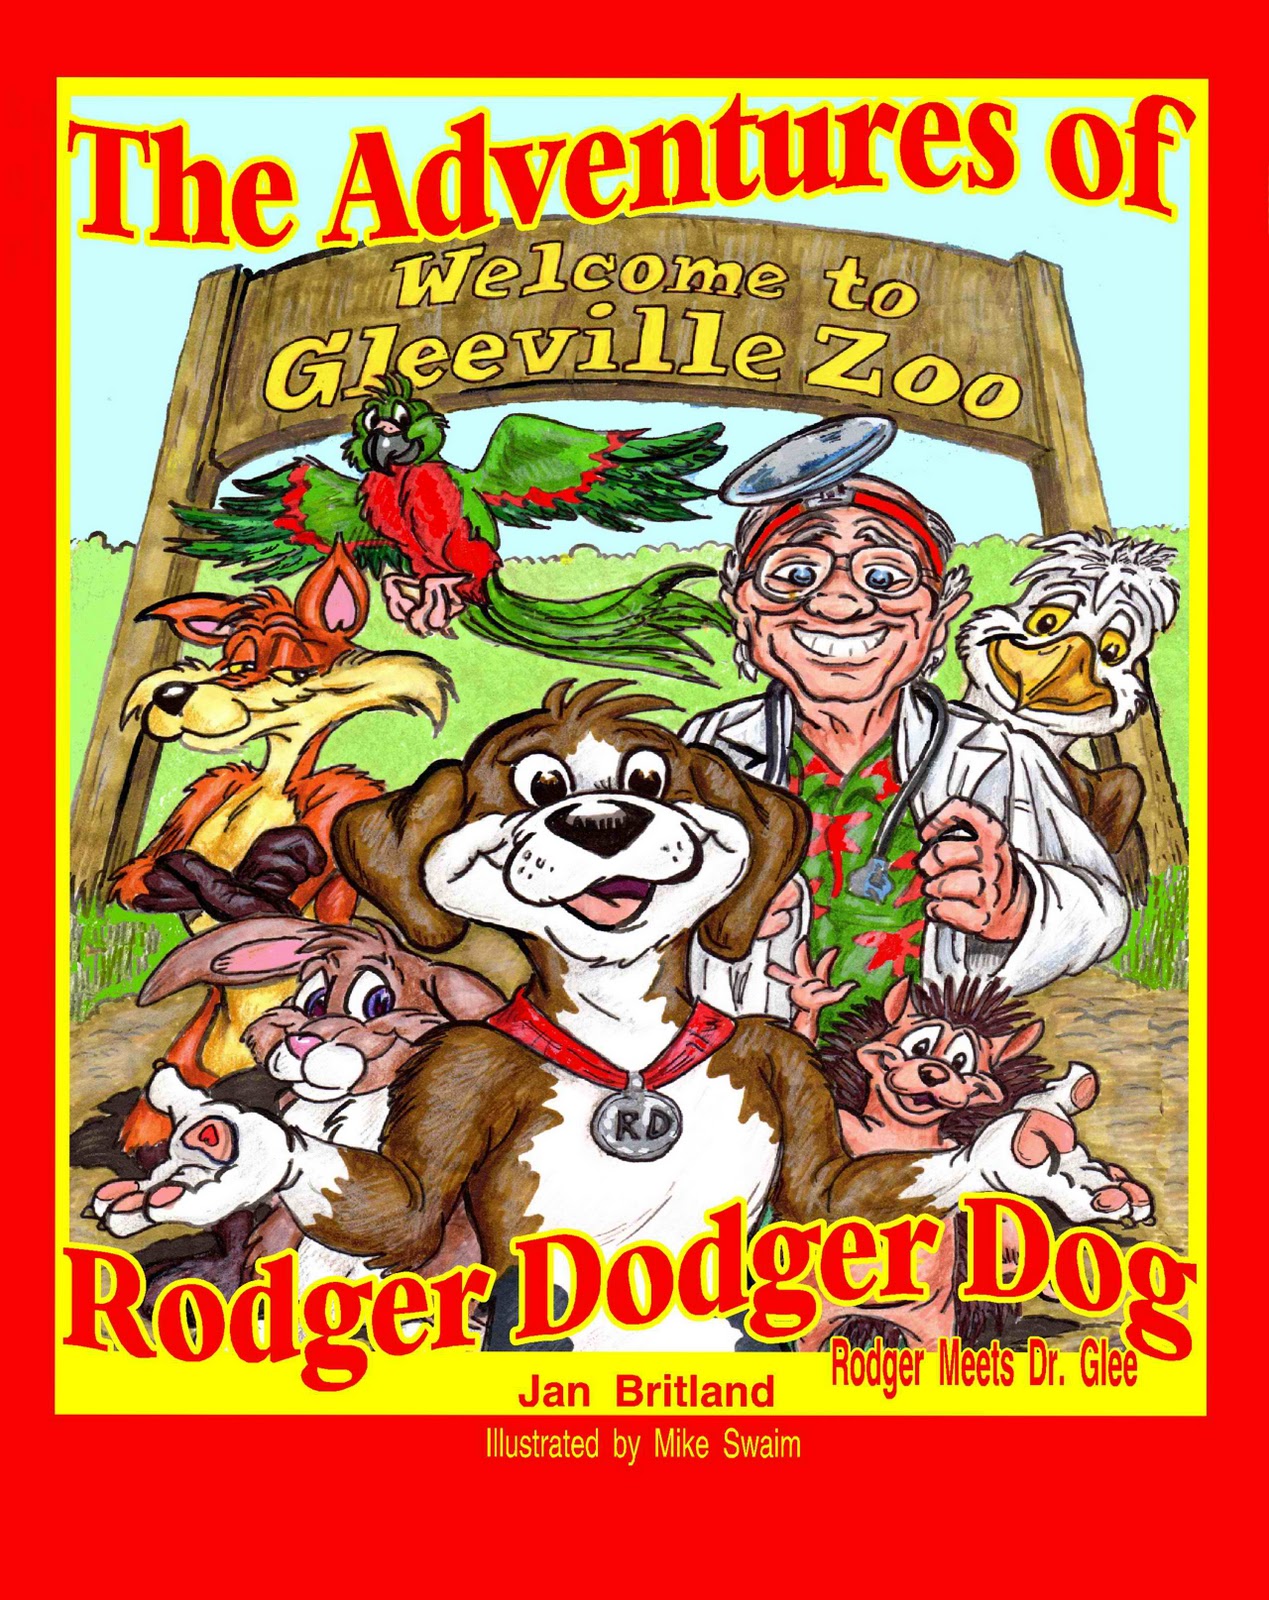 The Adventures of Rodger Dodger Dog: Rodger meets Dr. Glee Jan Britland and Mike Swaim